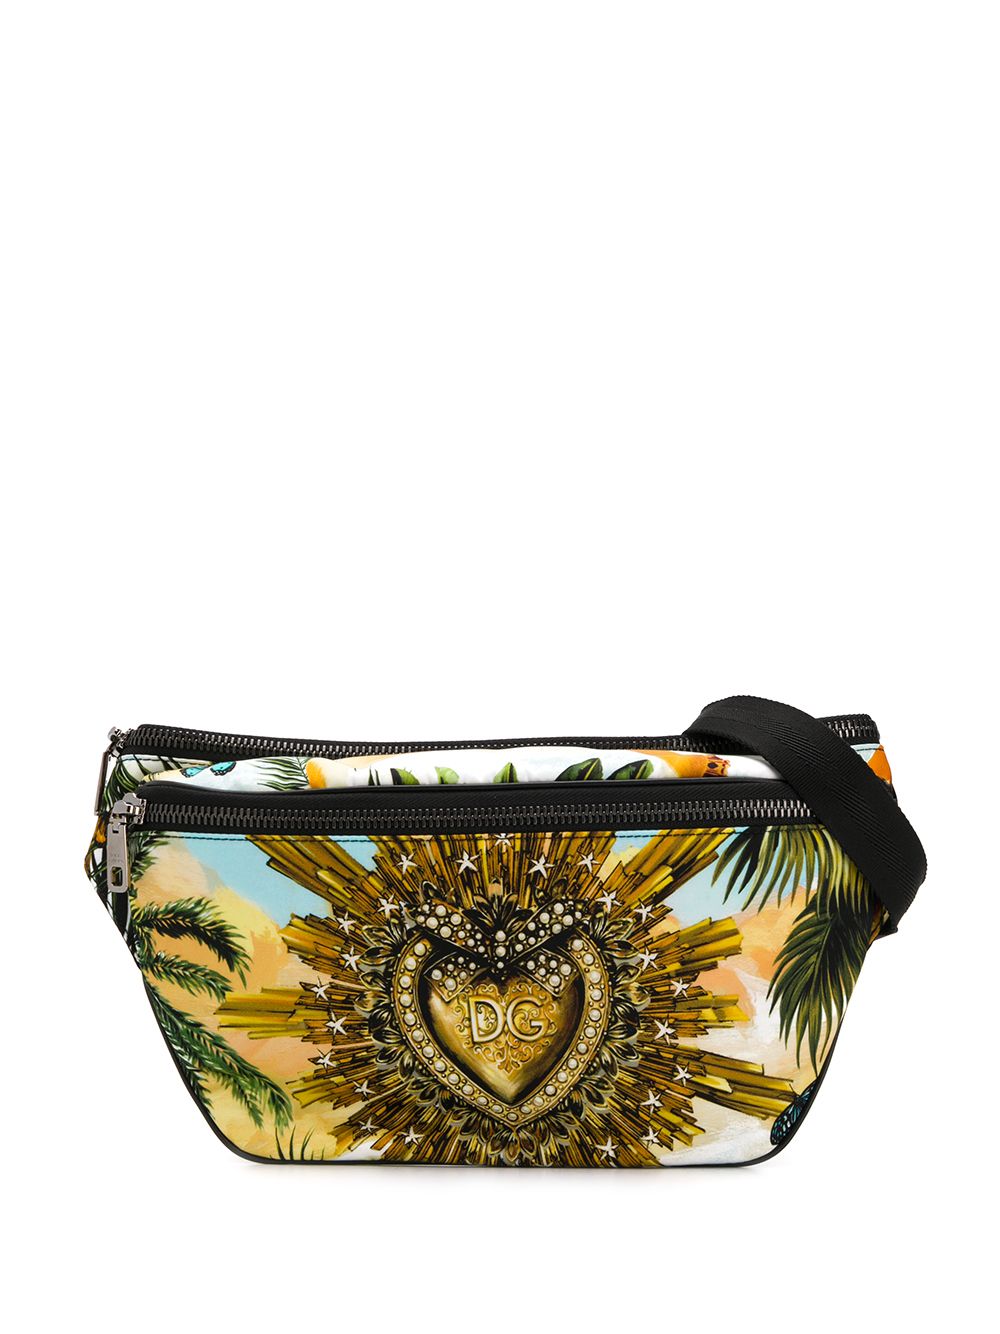 фото Dolce & Gabbana поясная сумка с принтом Sacred Heart